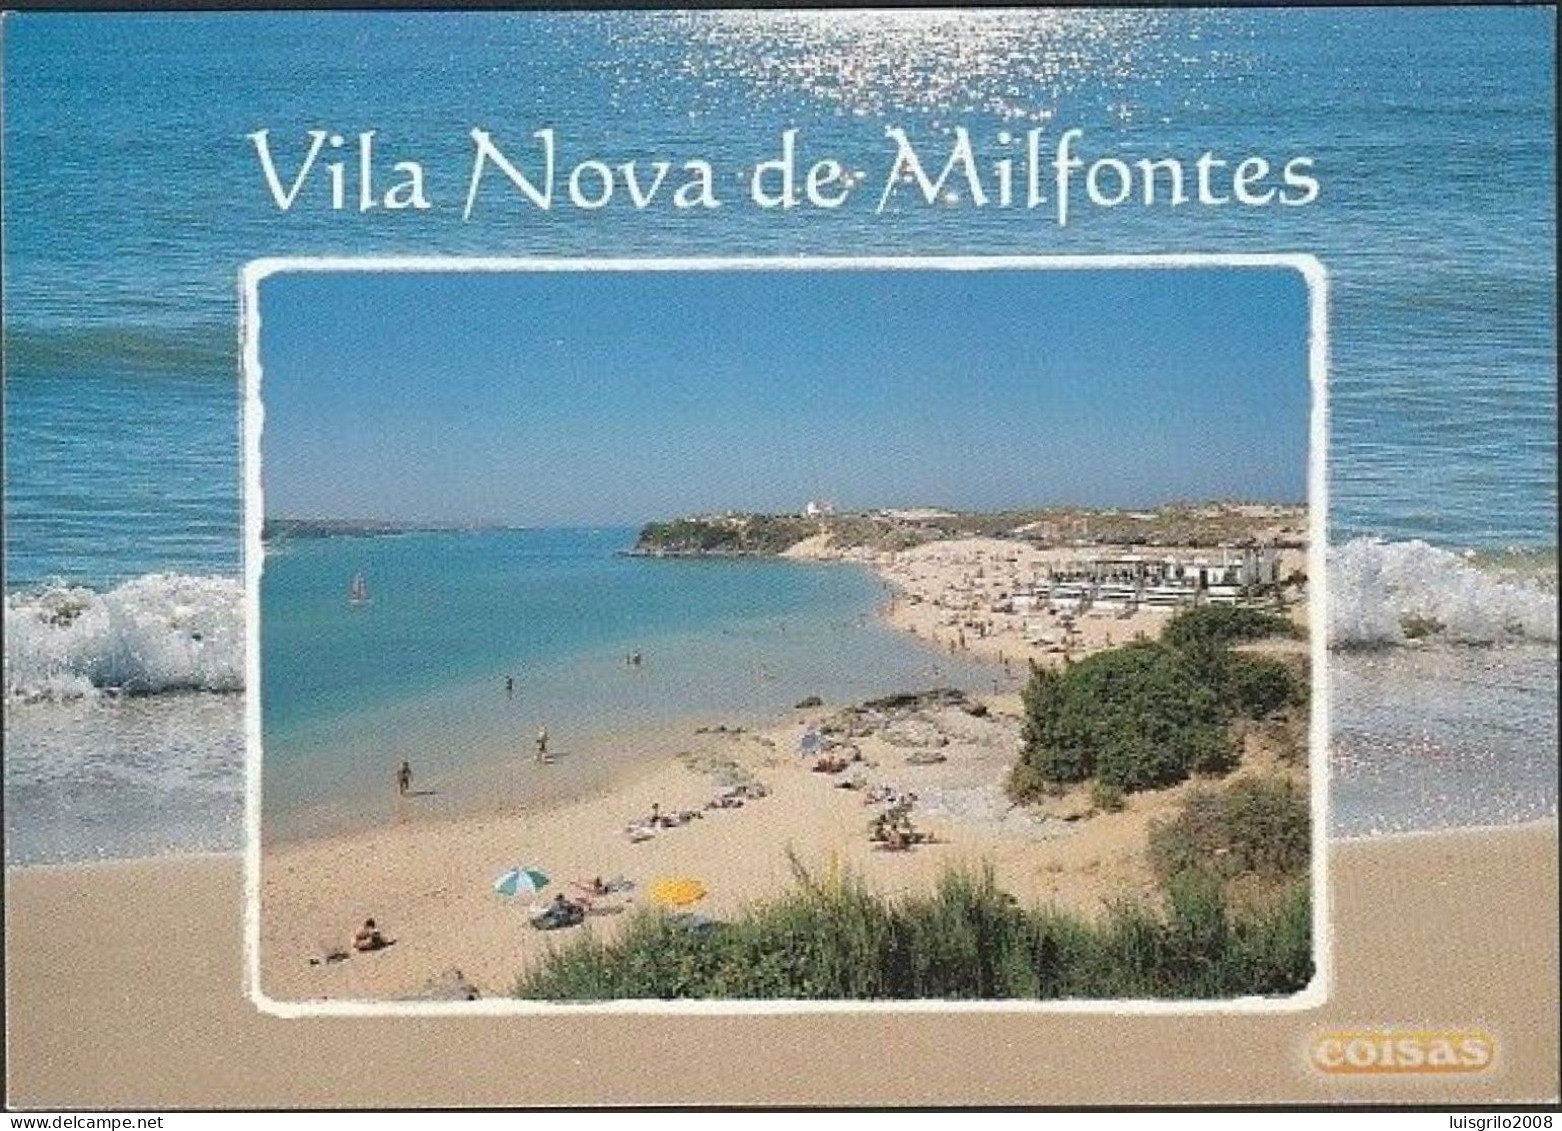 Vila Nova De Milfontes - Vista Parcial E Praia - Beja